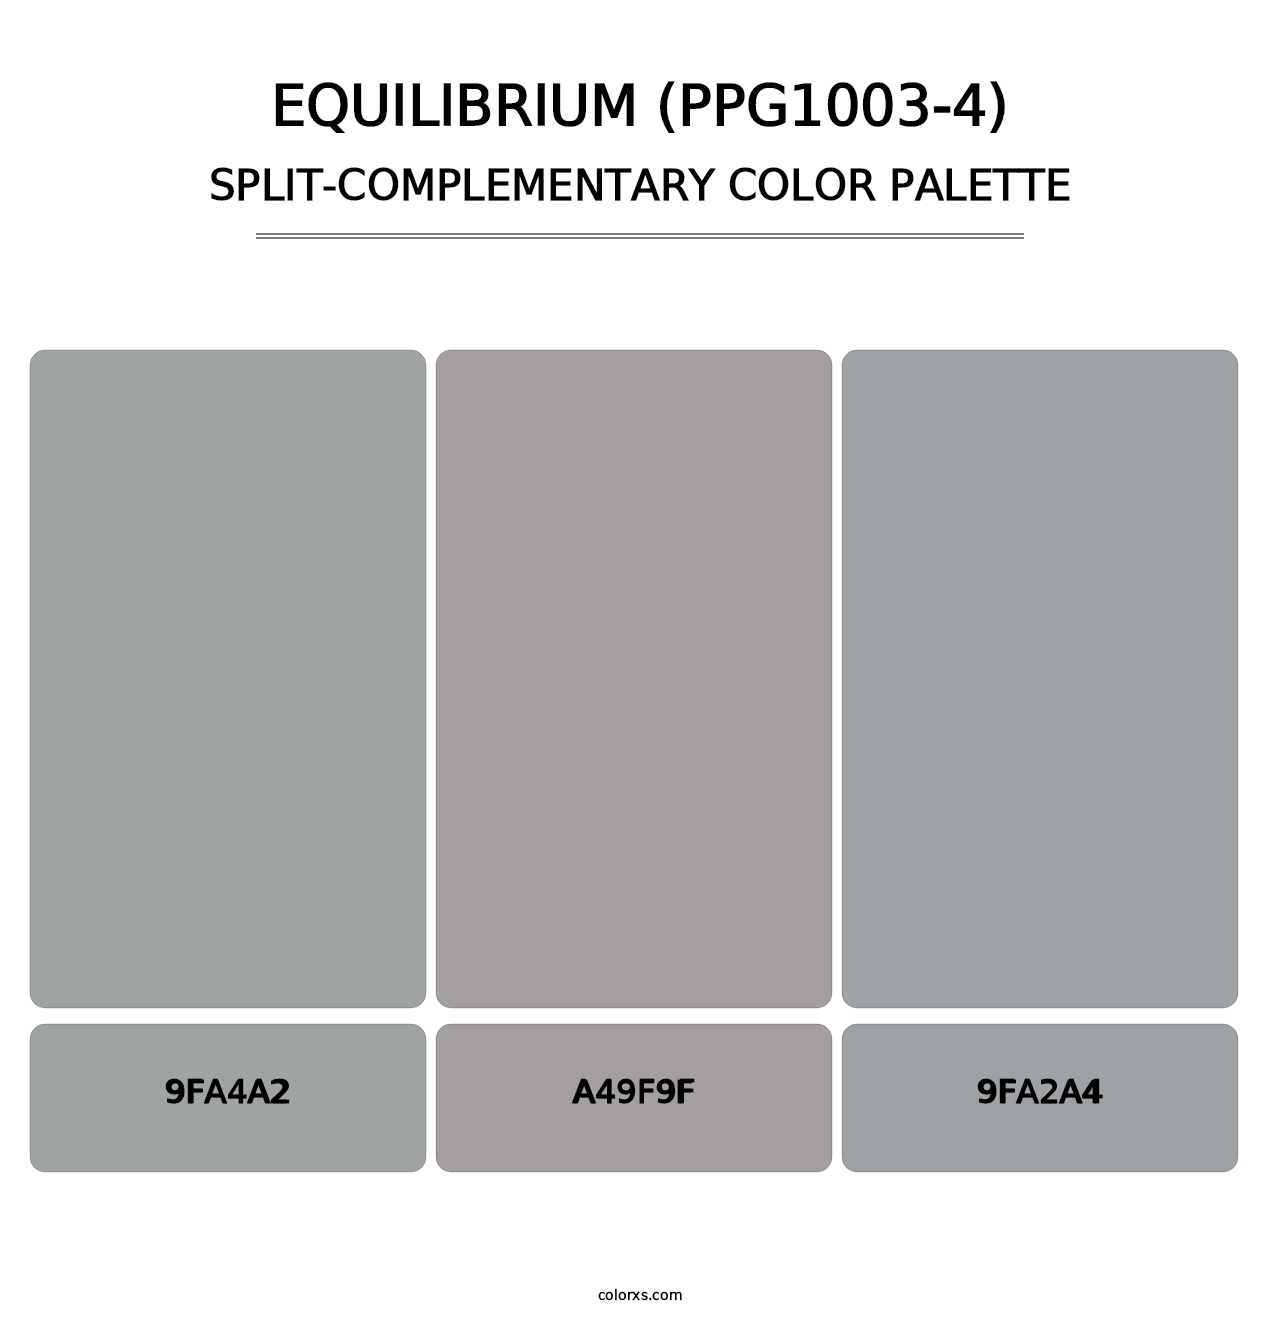 Equilibrium (PPG1003-4) - Split-Complementary Color Palette